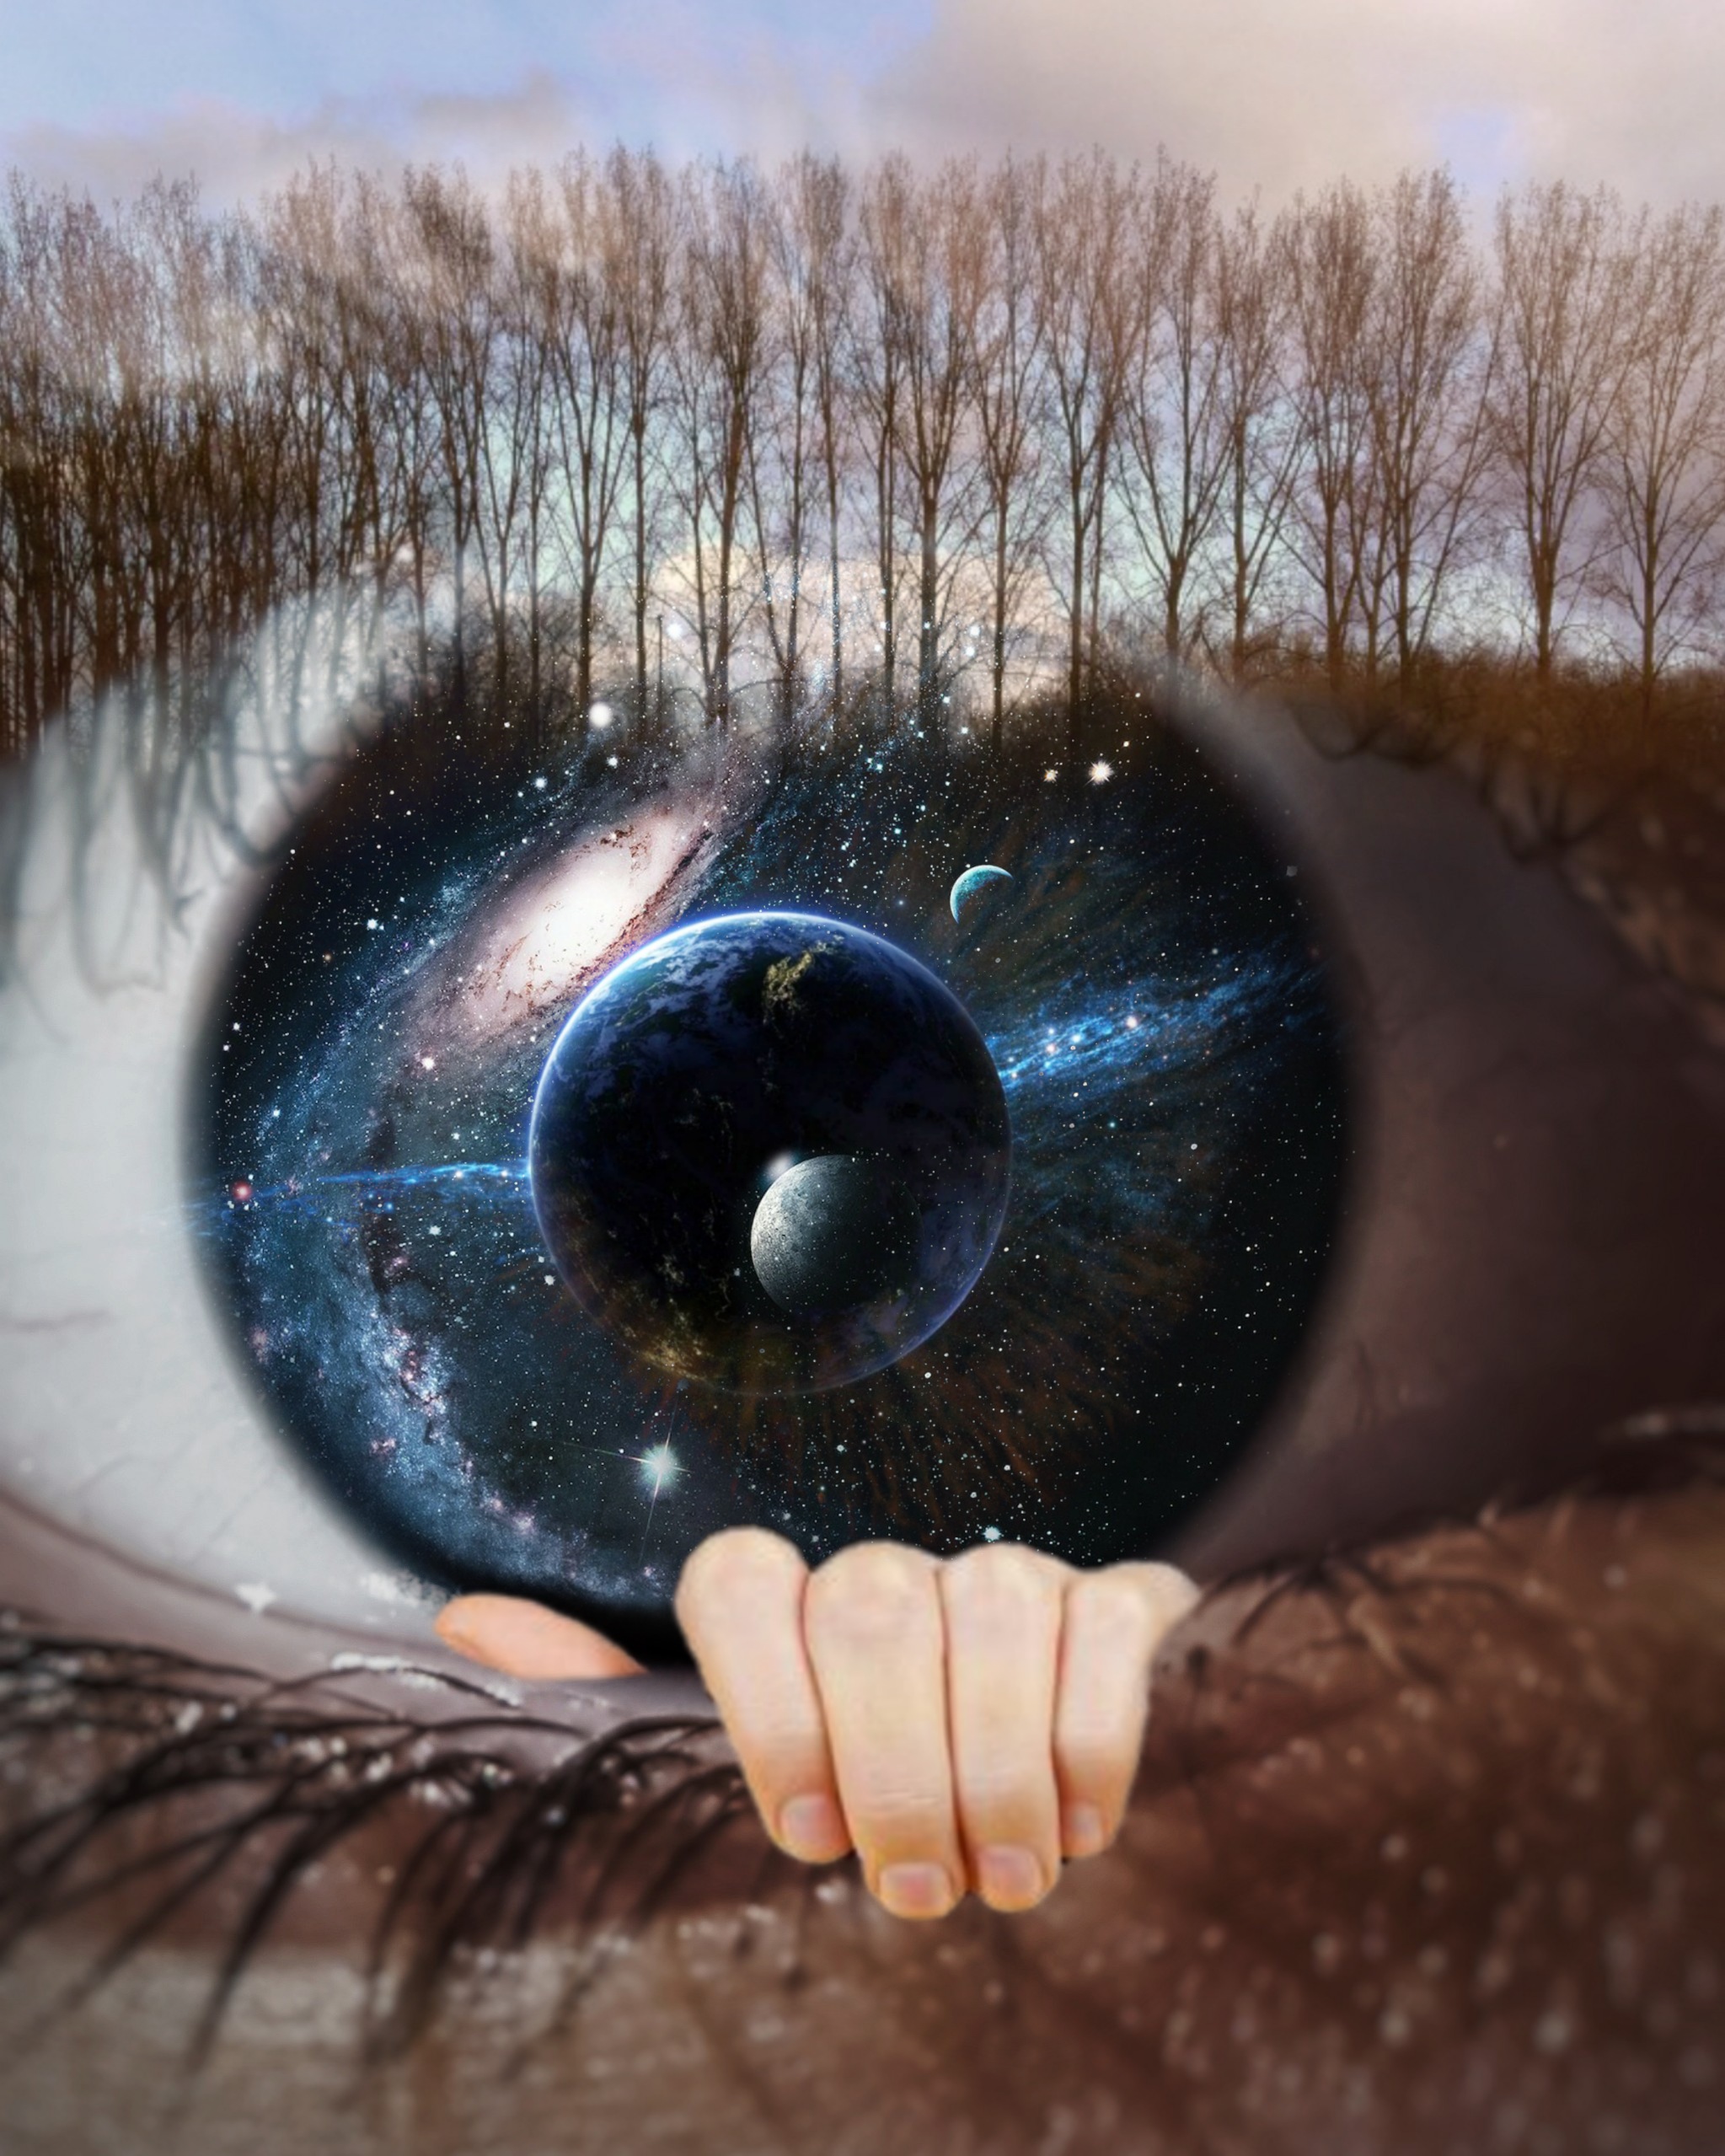 #doubleexposure #eyes #eyeart #forest #galaxy #galaxyeye #myedit #madewithpicsart #surreal #surrealism #araceliss #photomanipulation #freetoedit #imaginati